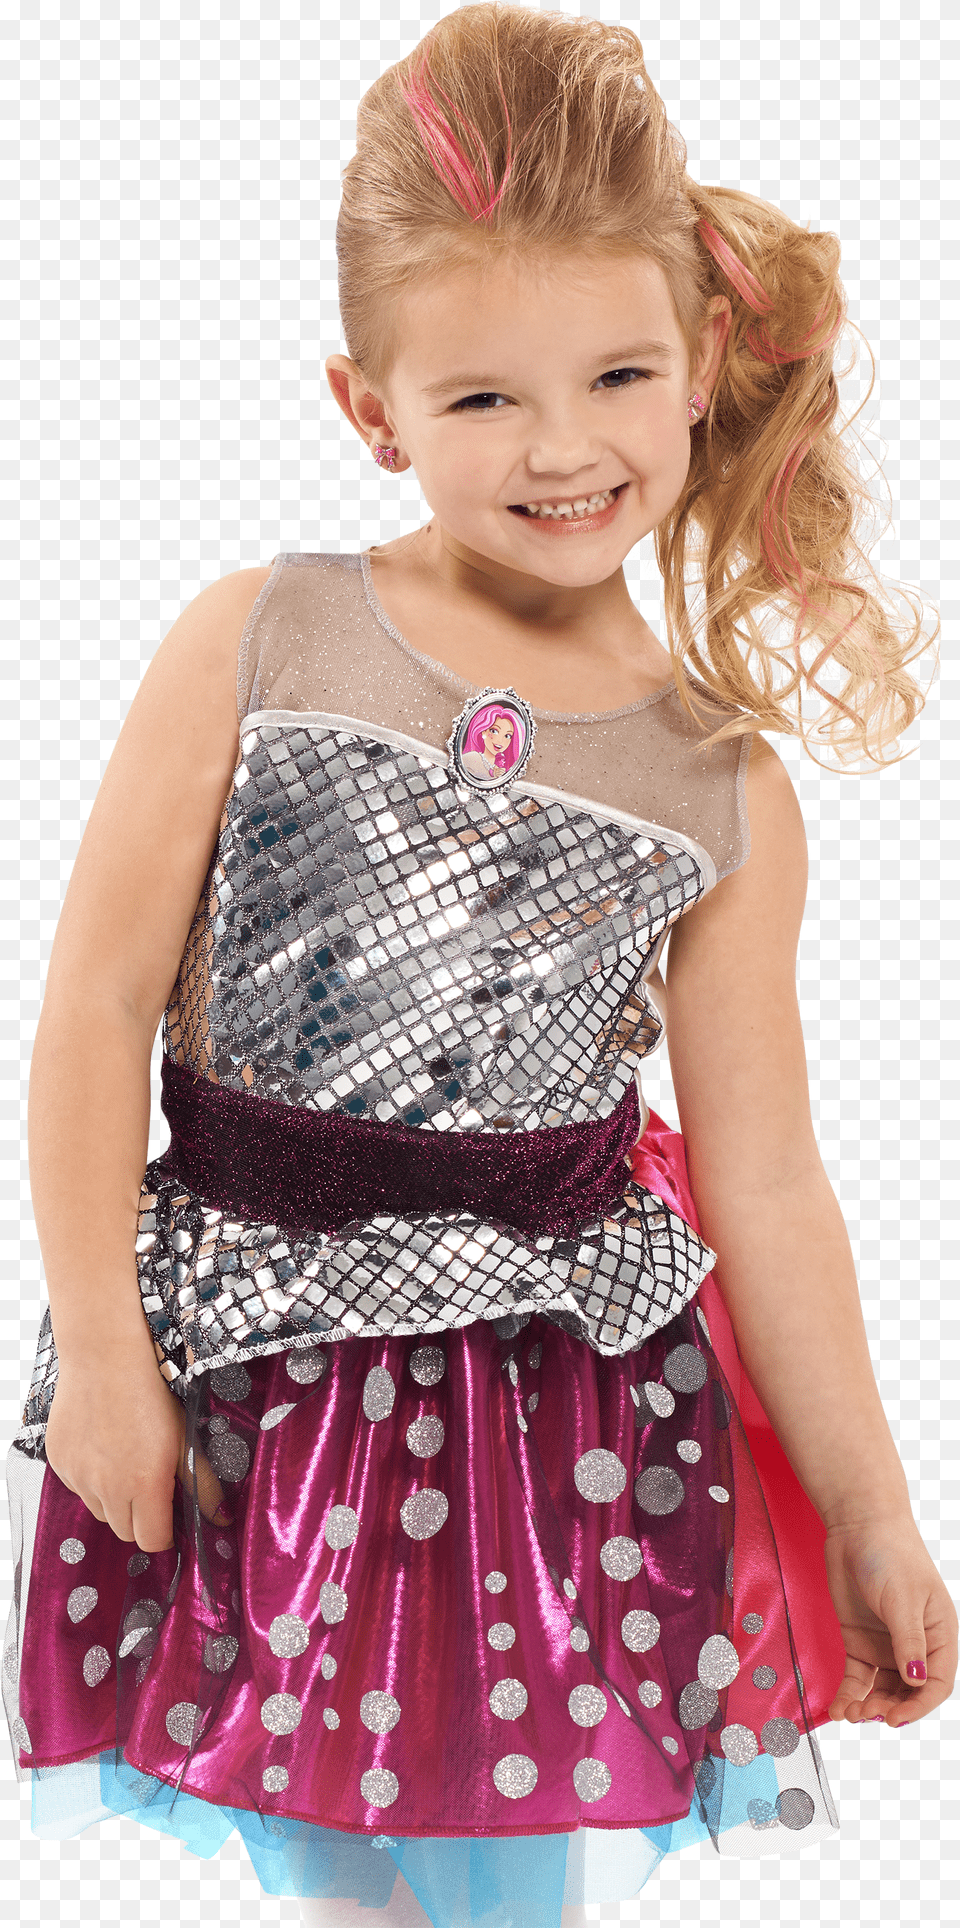 Barbie Rock N Royals Dress Portable Network Graphics Png